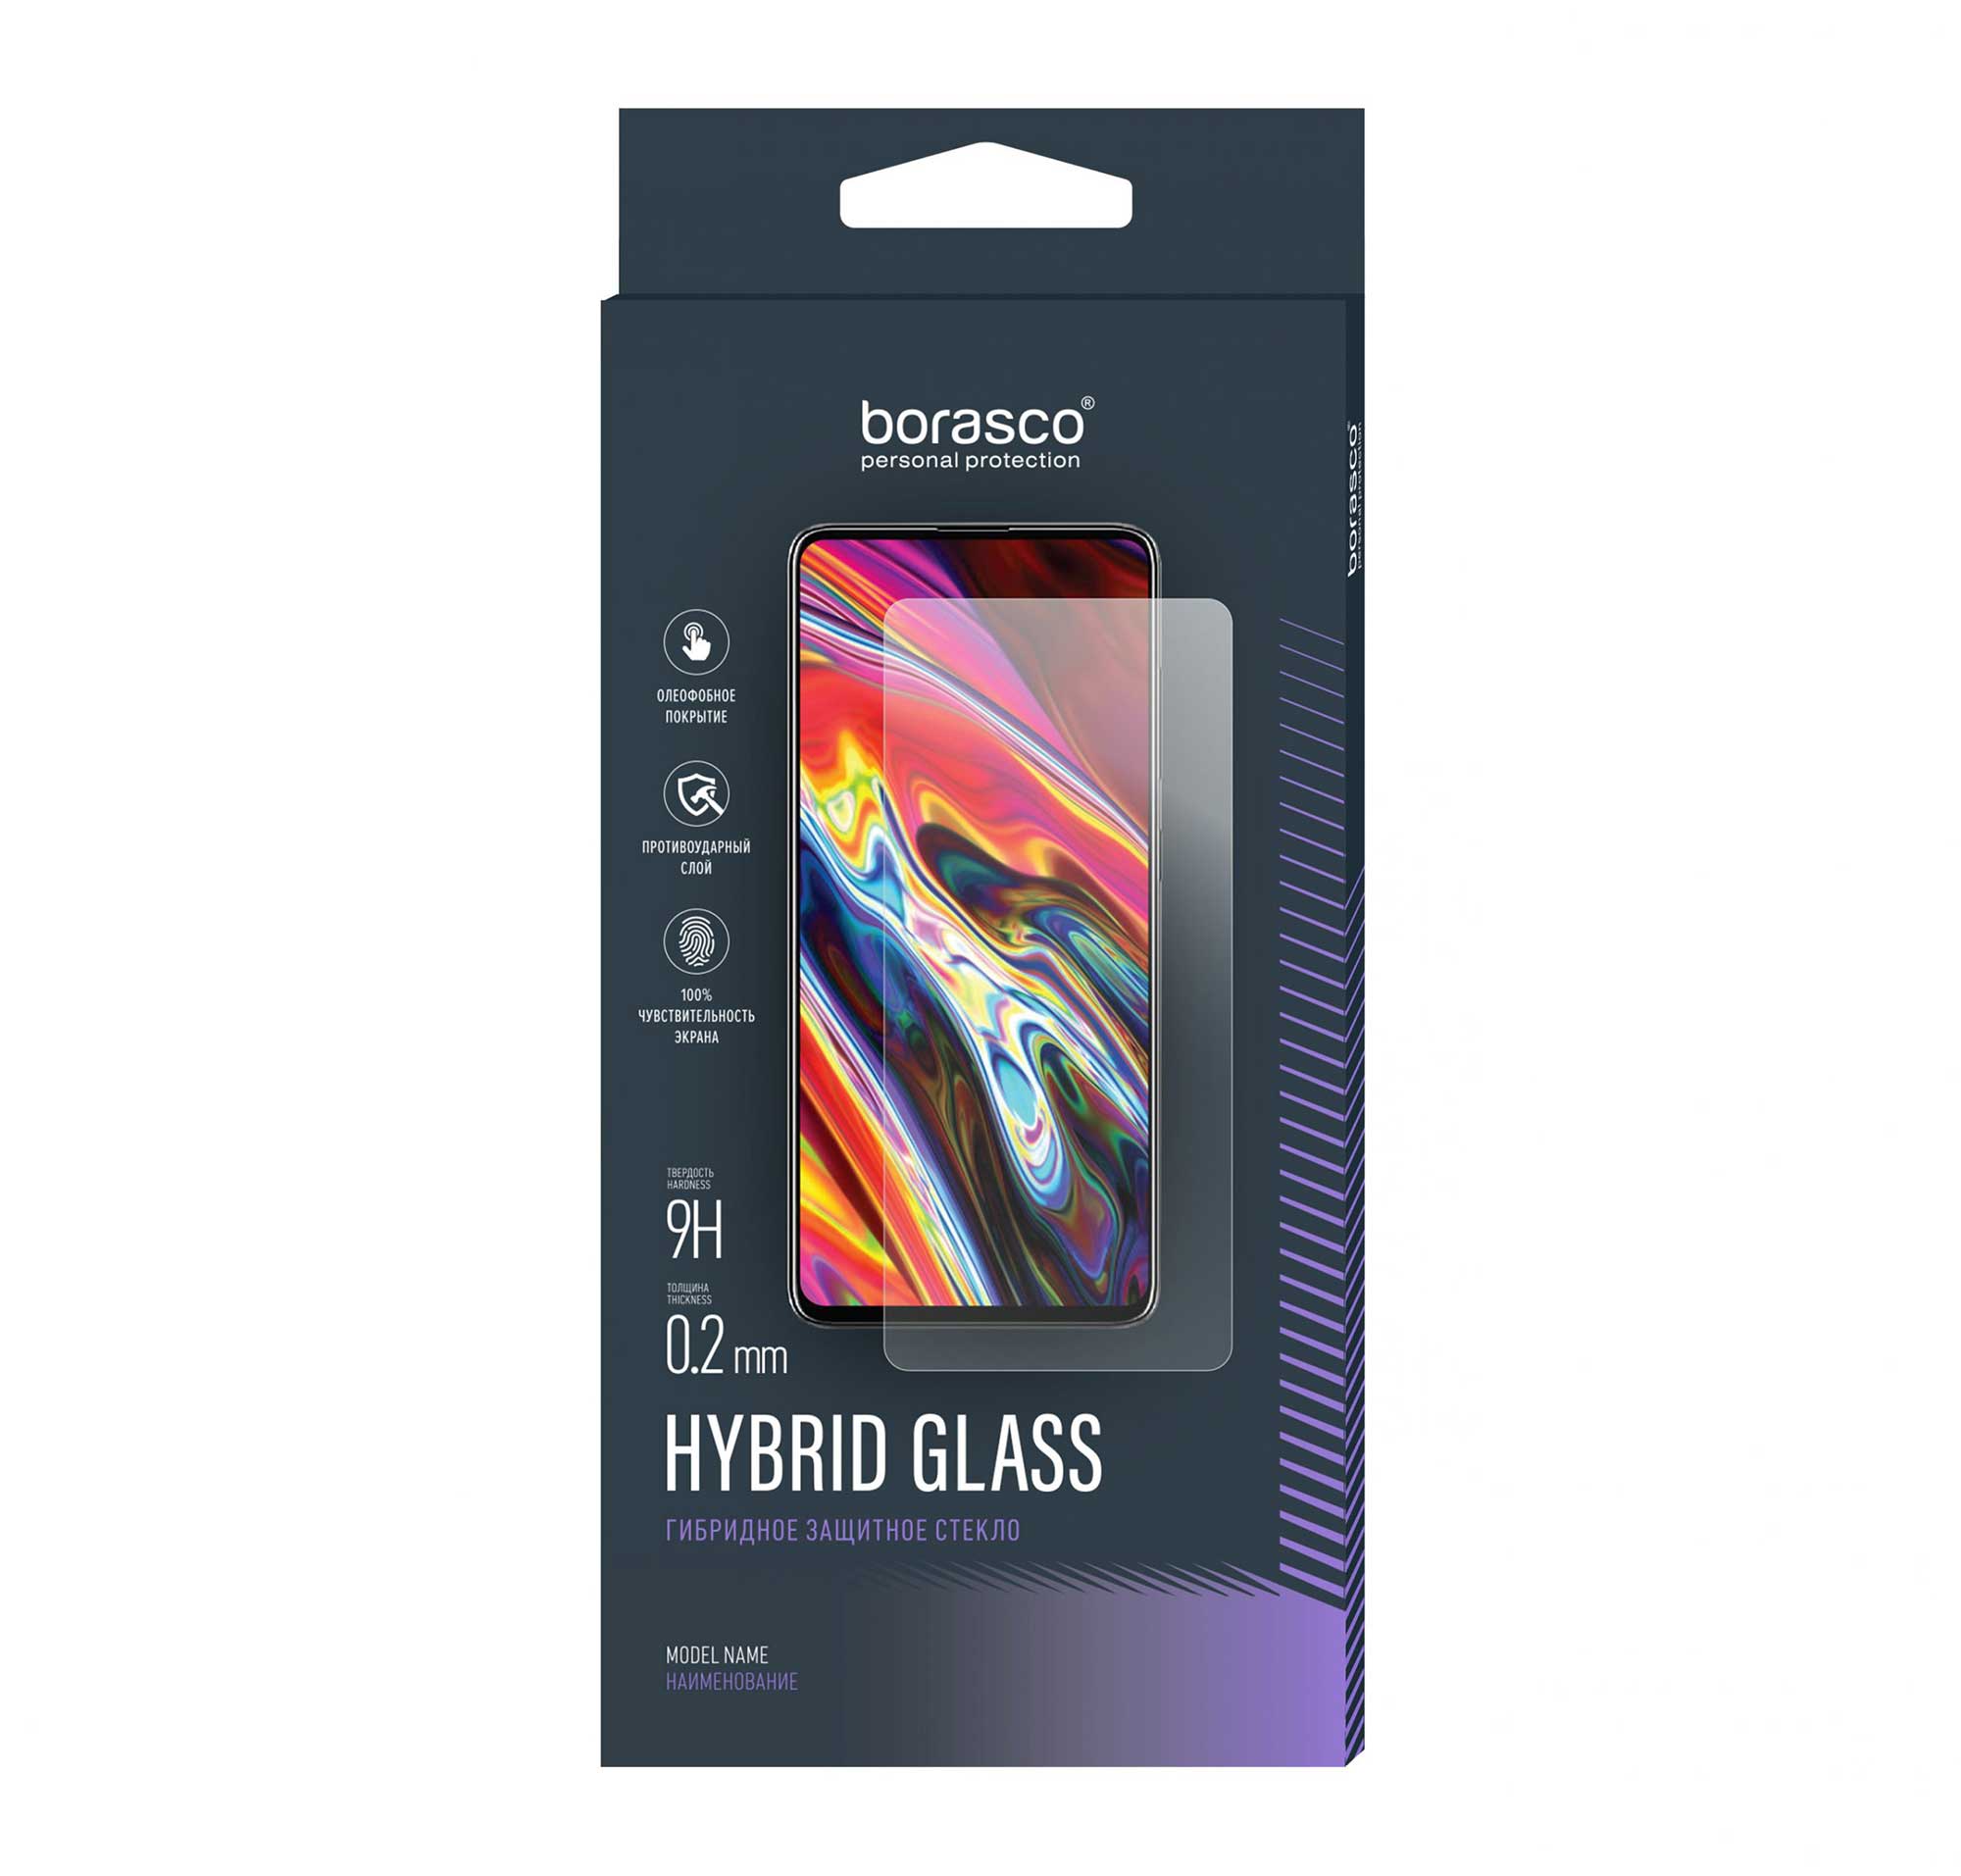 Защитное стекло BoraSCO Hybrid Glass для Vivo Y15s/ Y15a/ Y01 защитное стекло для объектива камеры vivo y01 закаленное стекло для vivo y01 y11s y33s y30g y72 y31 y20 y20i y21 стекло для vivo y01